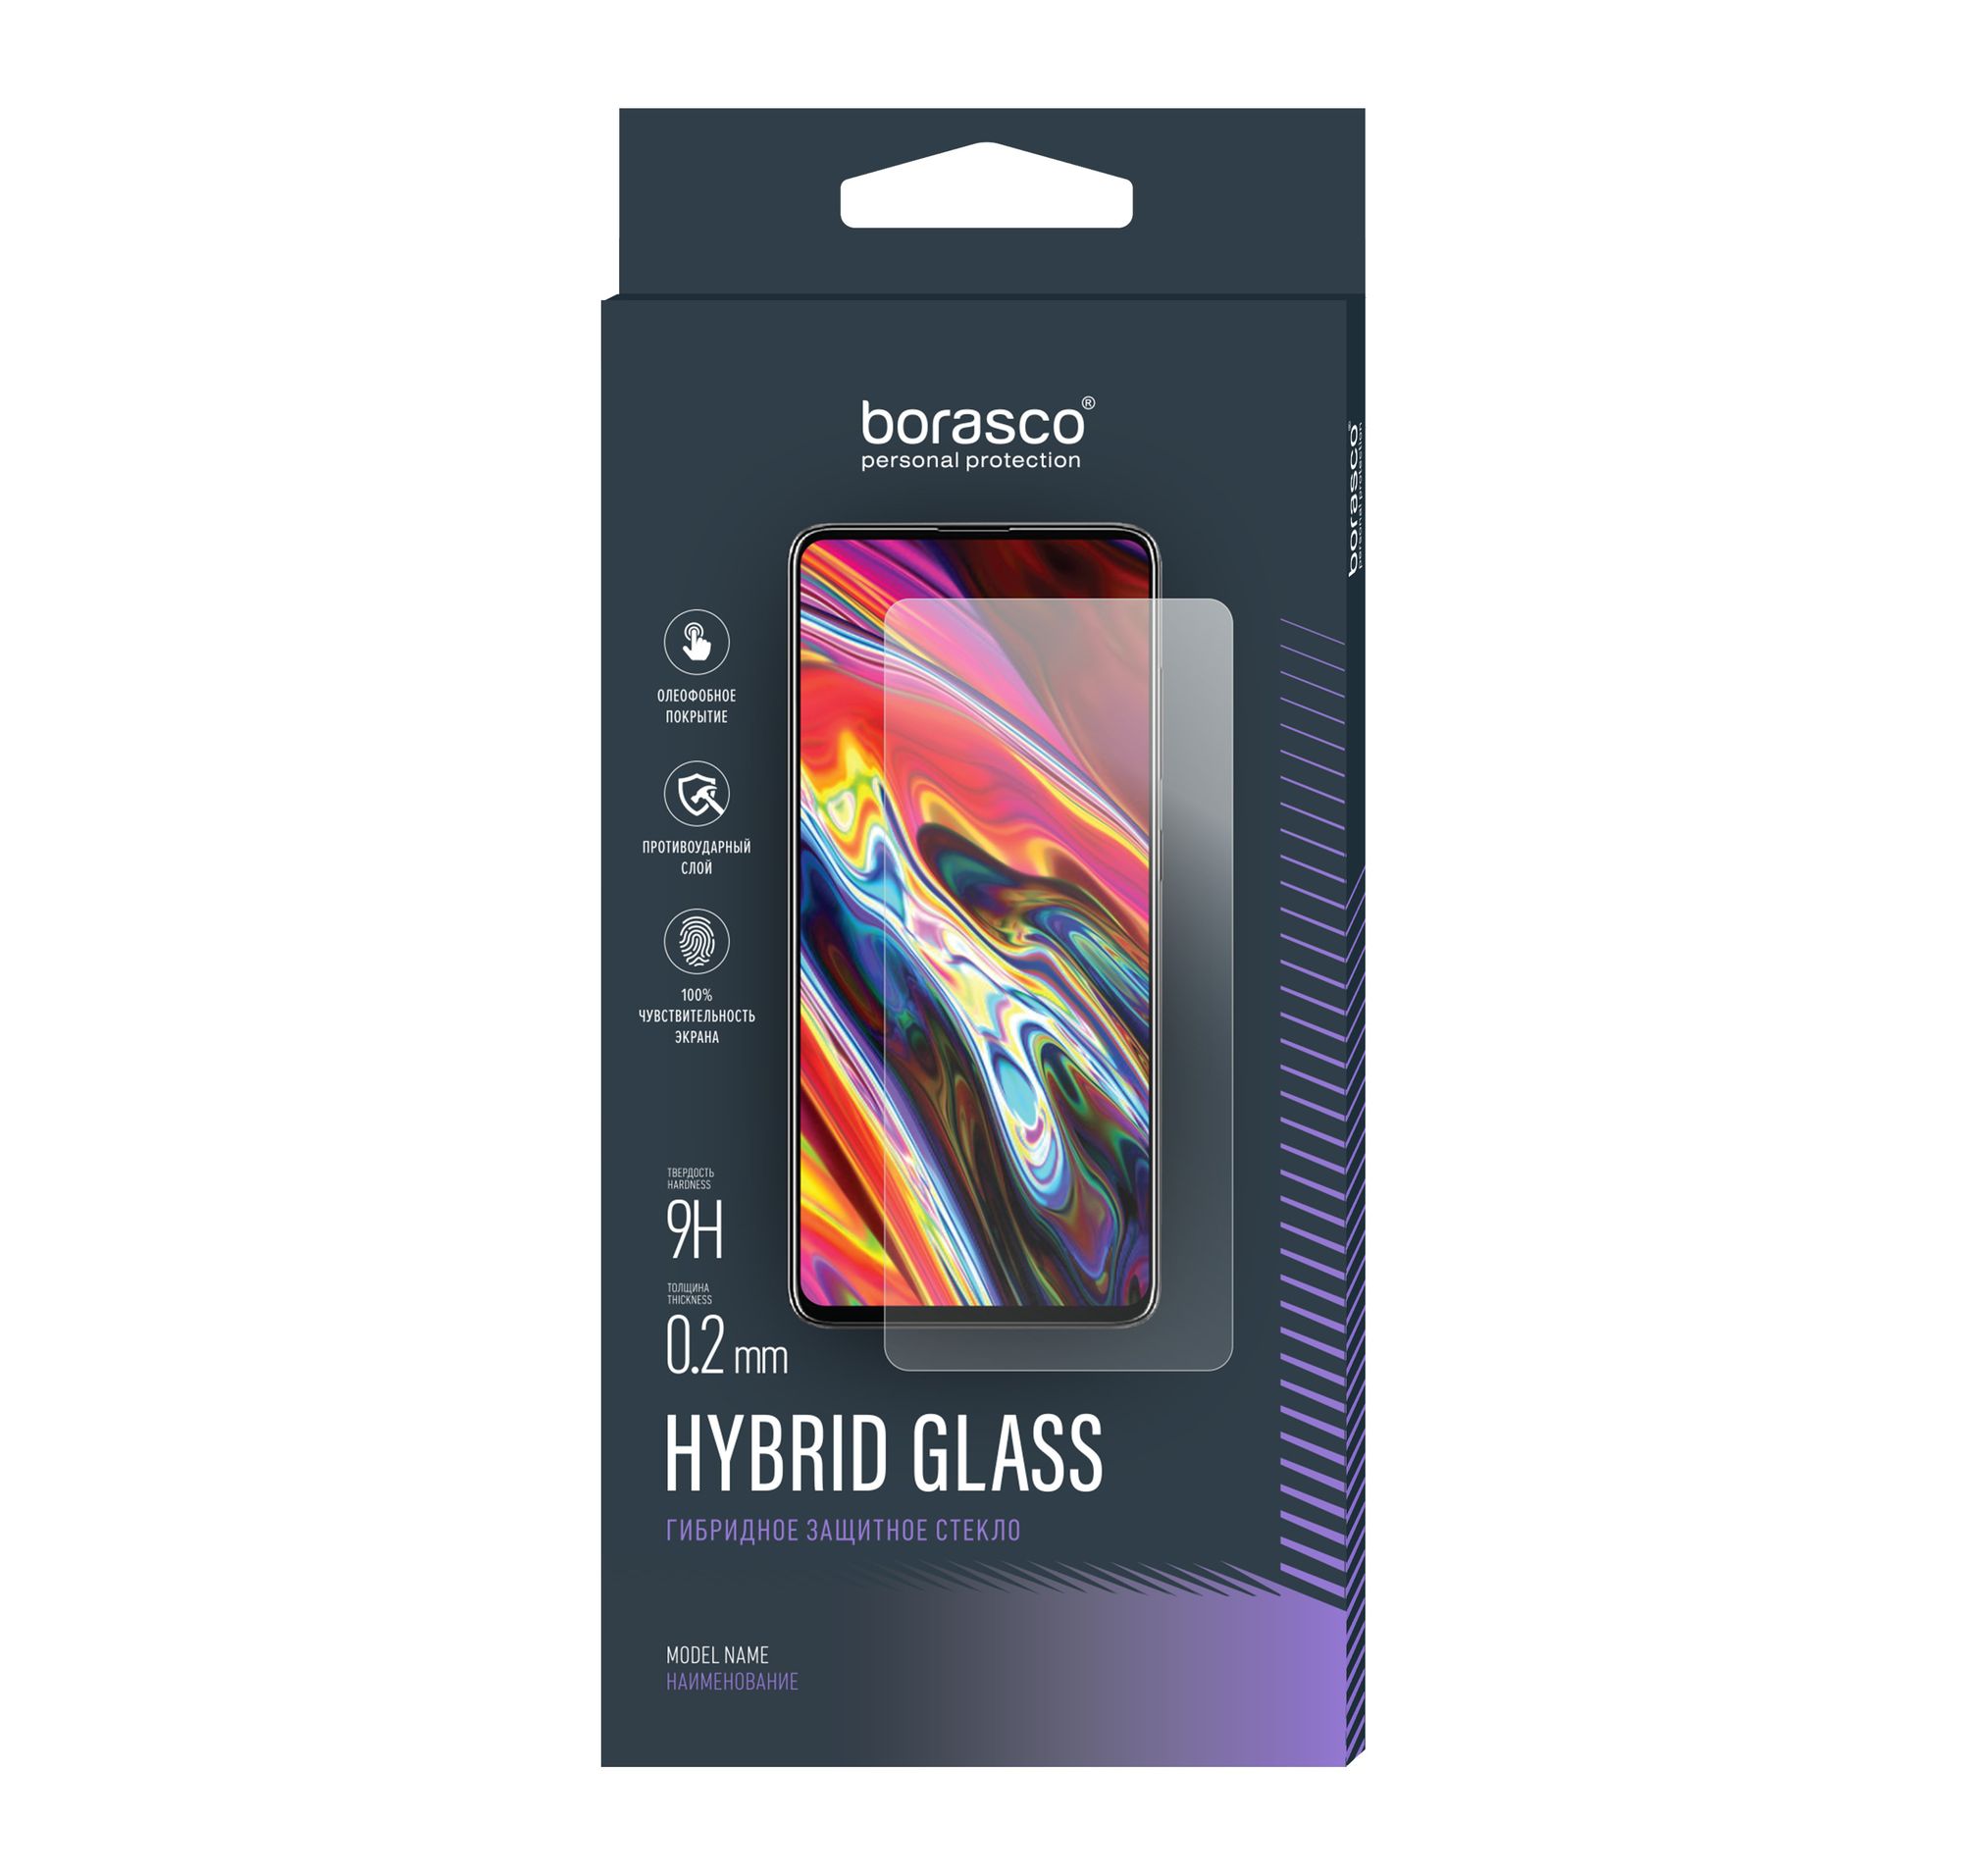 Стекло защитное Hybrid Glass VSP 0,26 мм для Xiaomi Mi 9 T (K20)/ Mi 9 T Pro (K20 Pro) защитное стекло полное покрытие для xiaomi mi 9t 9t pro redmi k20 k20 pro черное